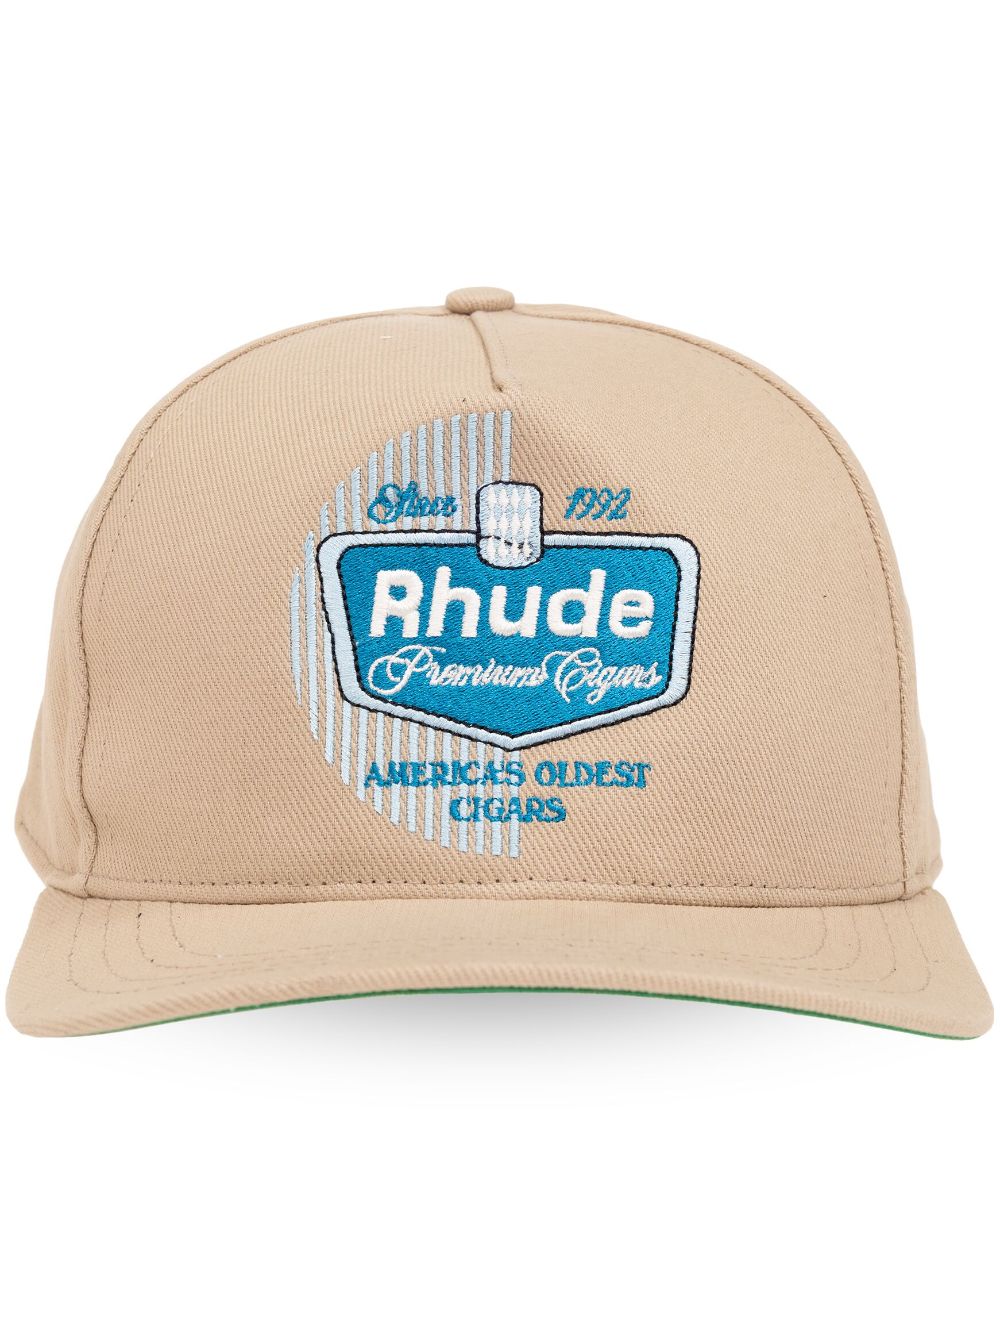 RHUDE Cigaro embroidered cap - Nude